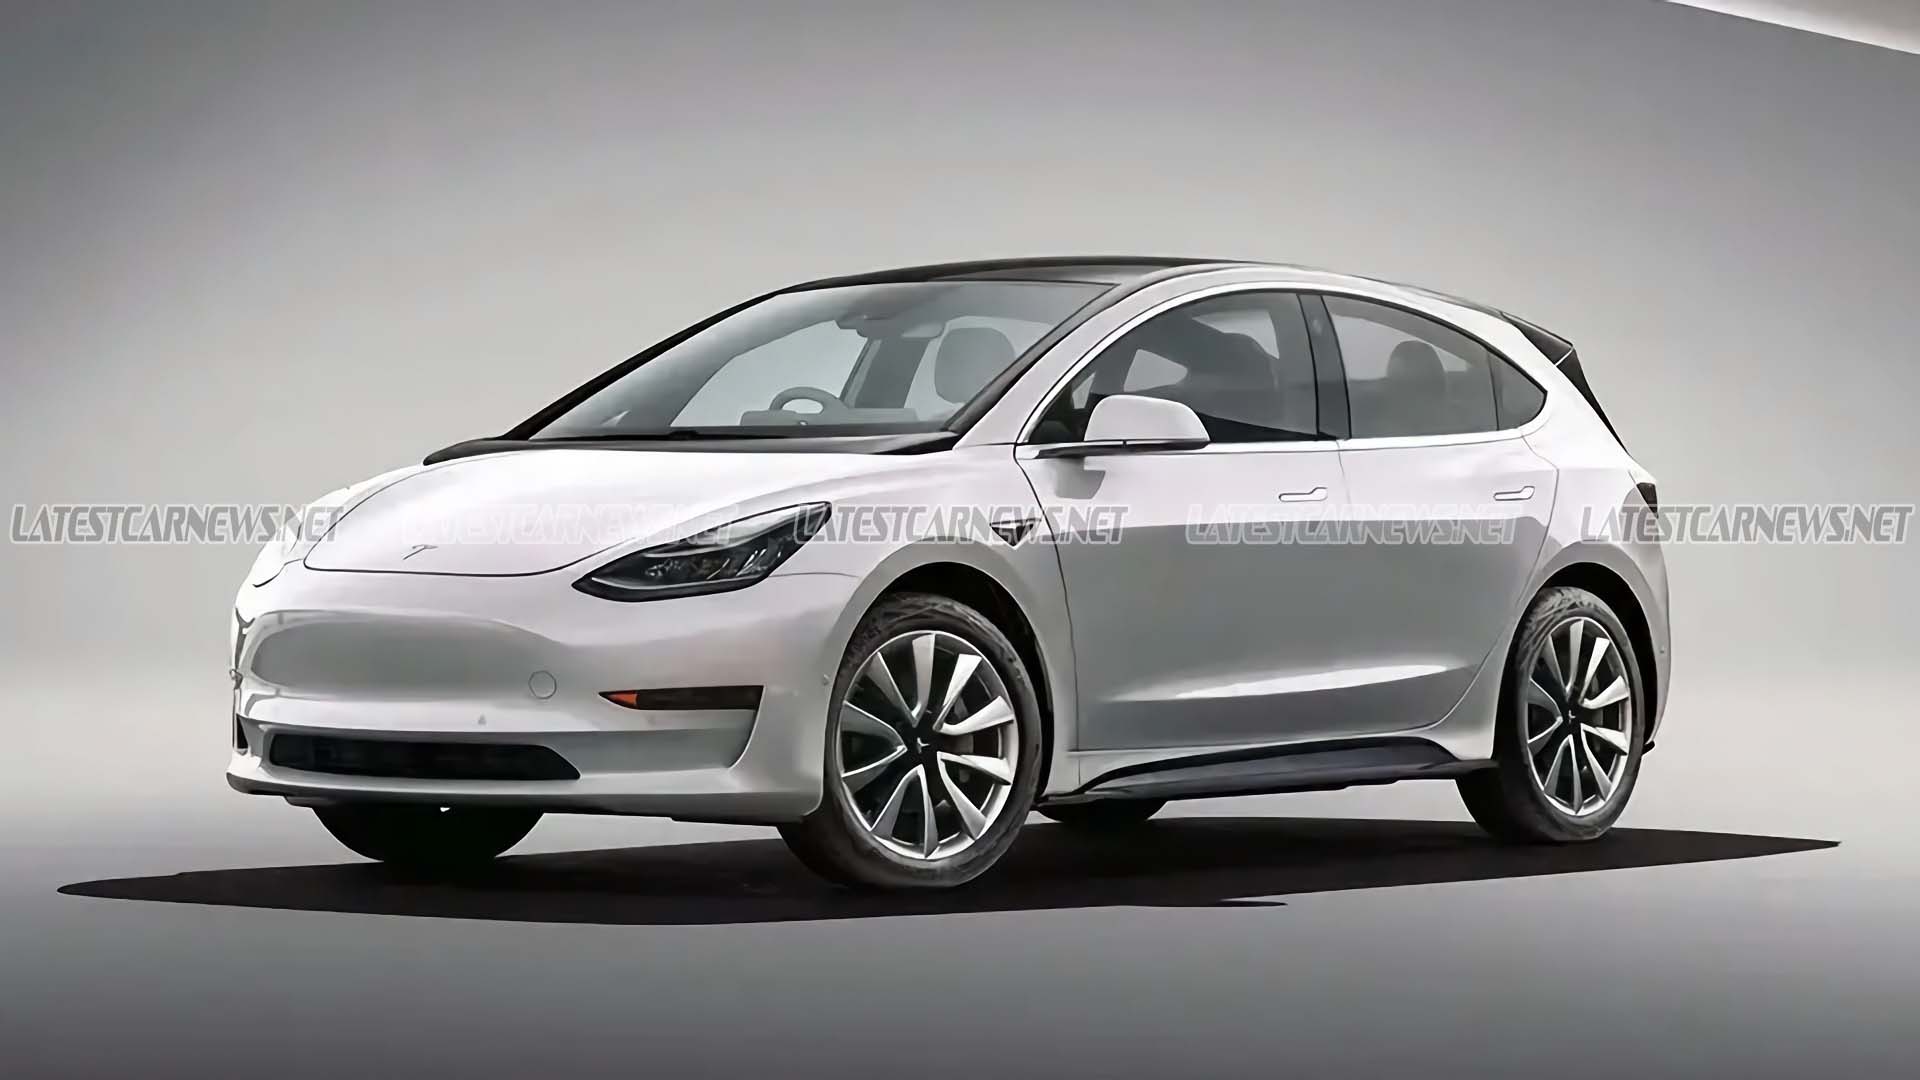 Elon Musk ยืนยัน จะไม่ใช้ชื่อ Model 2 ในรถยนต์ไฟฟ้าขนาดเล็ก